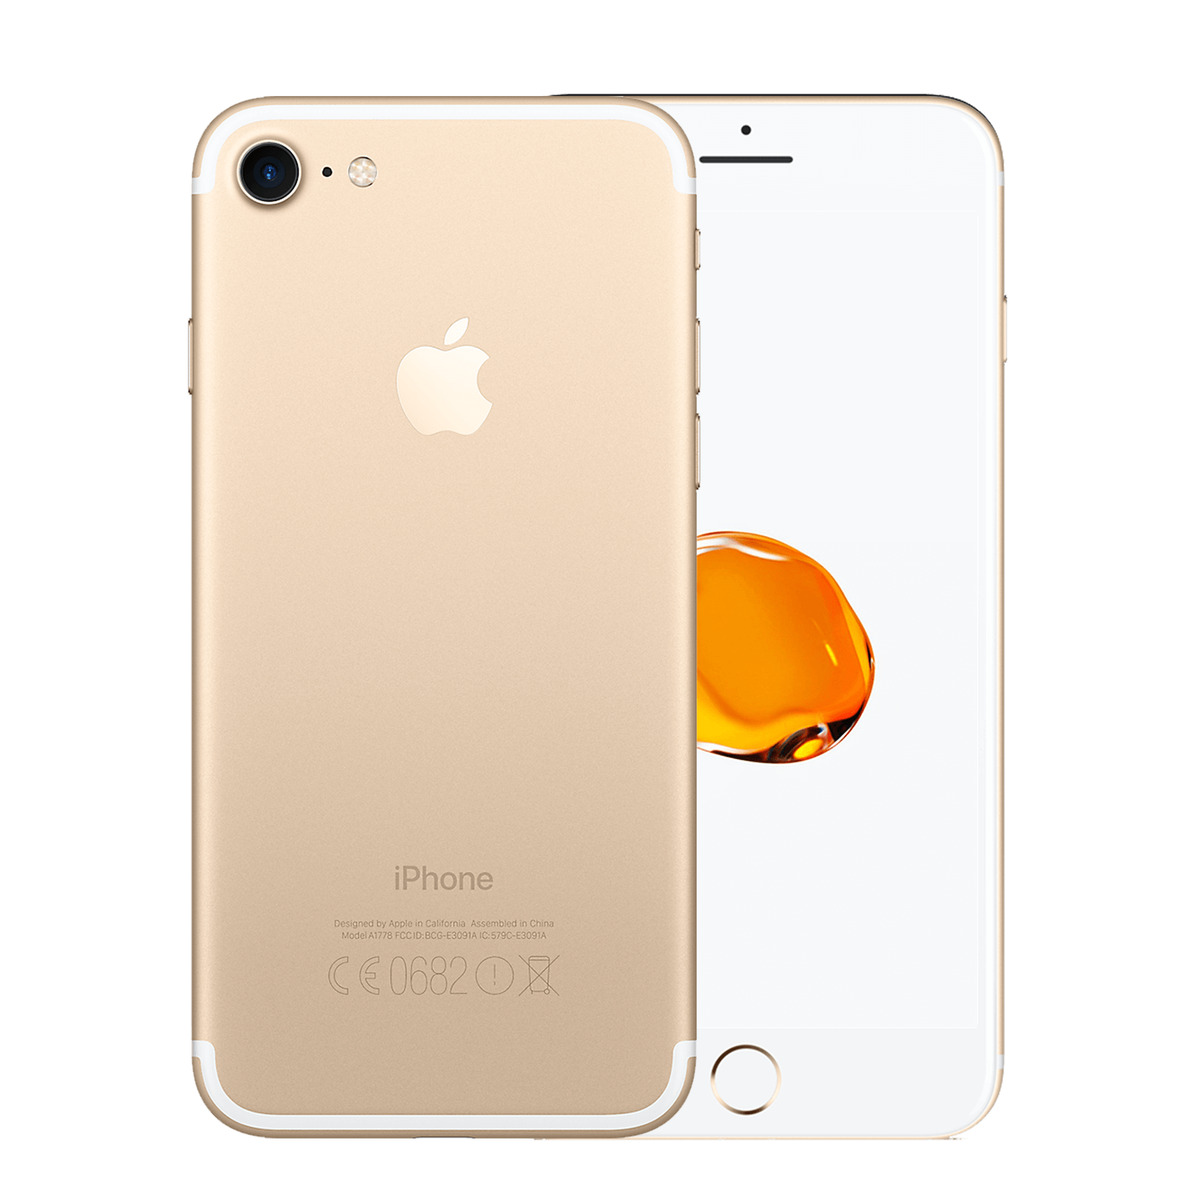 Apple iPhone 7 A1778 Unlocked 32GB Gold Very Good | eBay